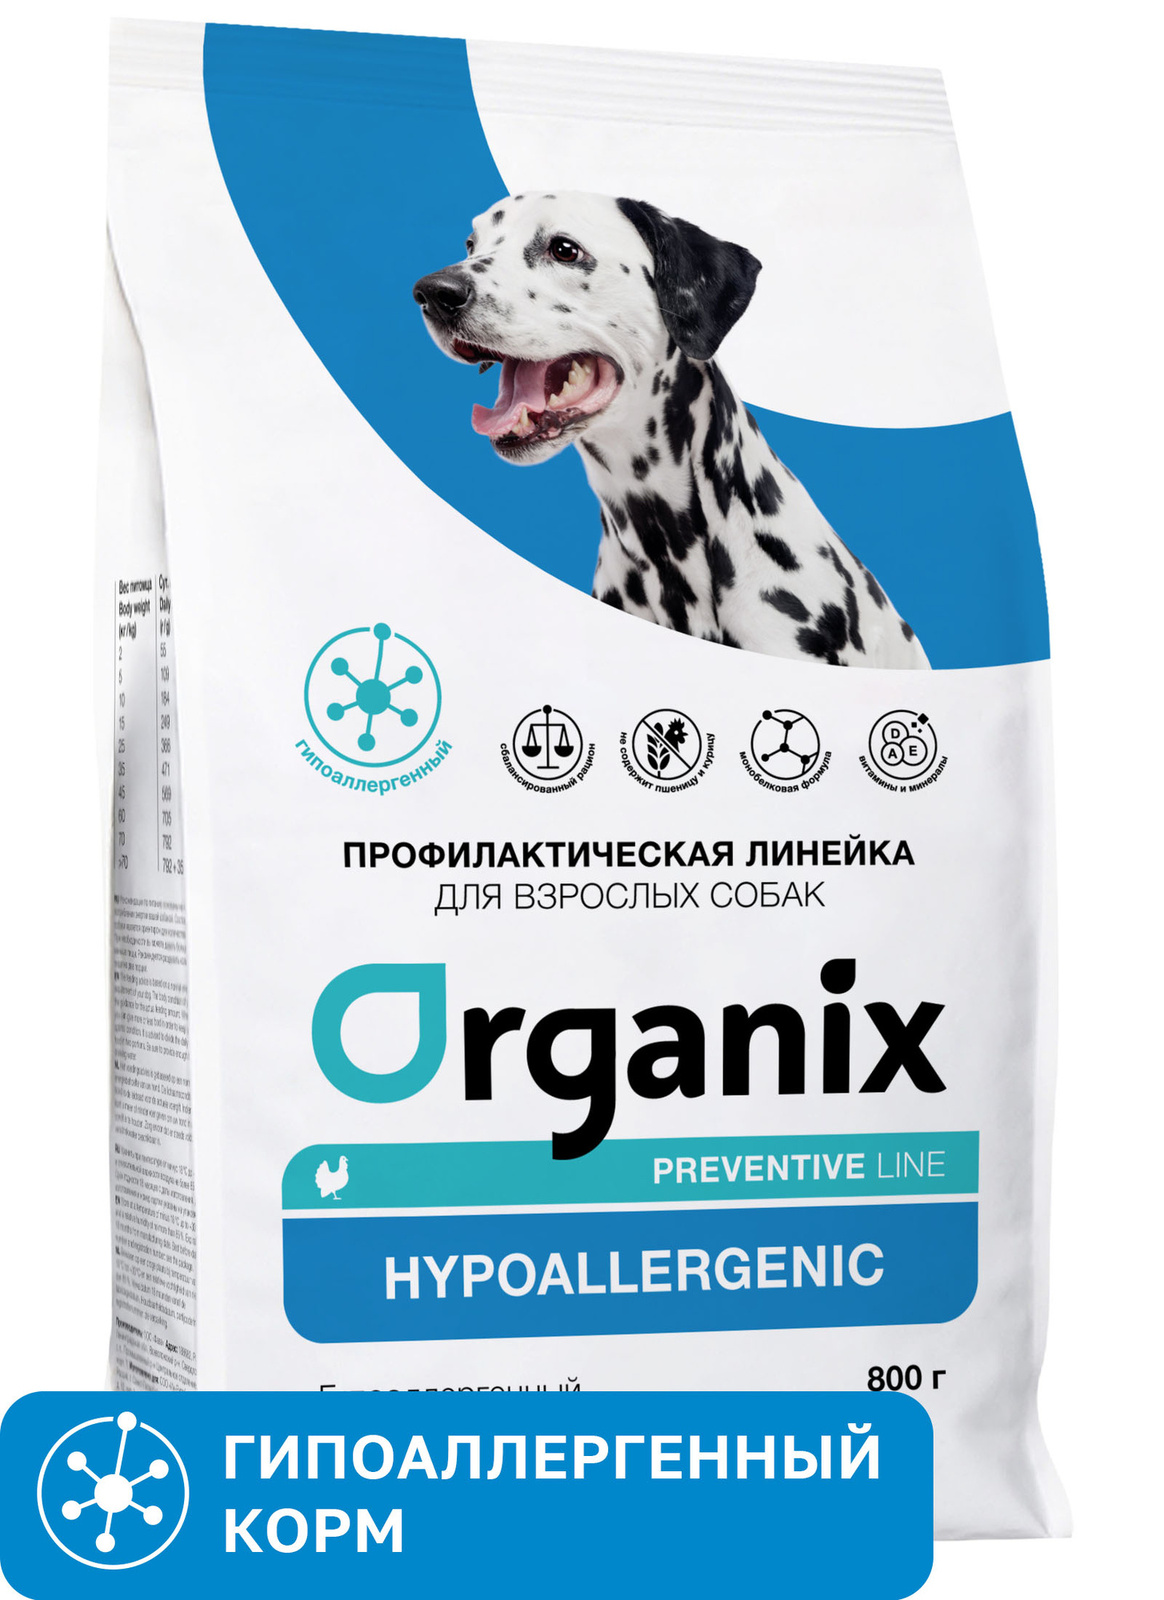 Organix Preventive Line Organix Preventive Line hypoallergenic сухой корм для собак Гипоаллергенный (2,5 кг)